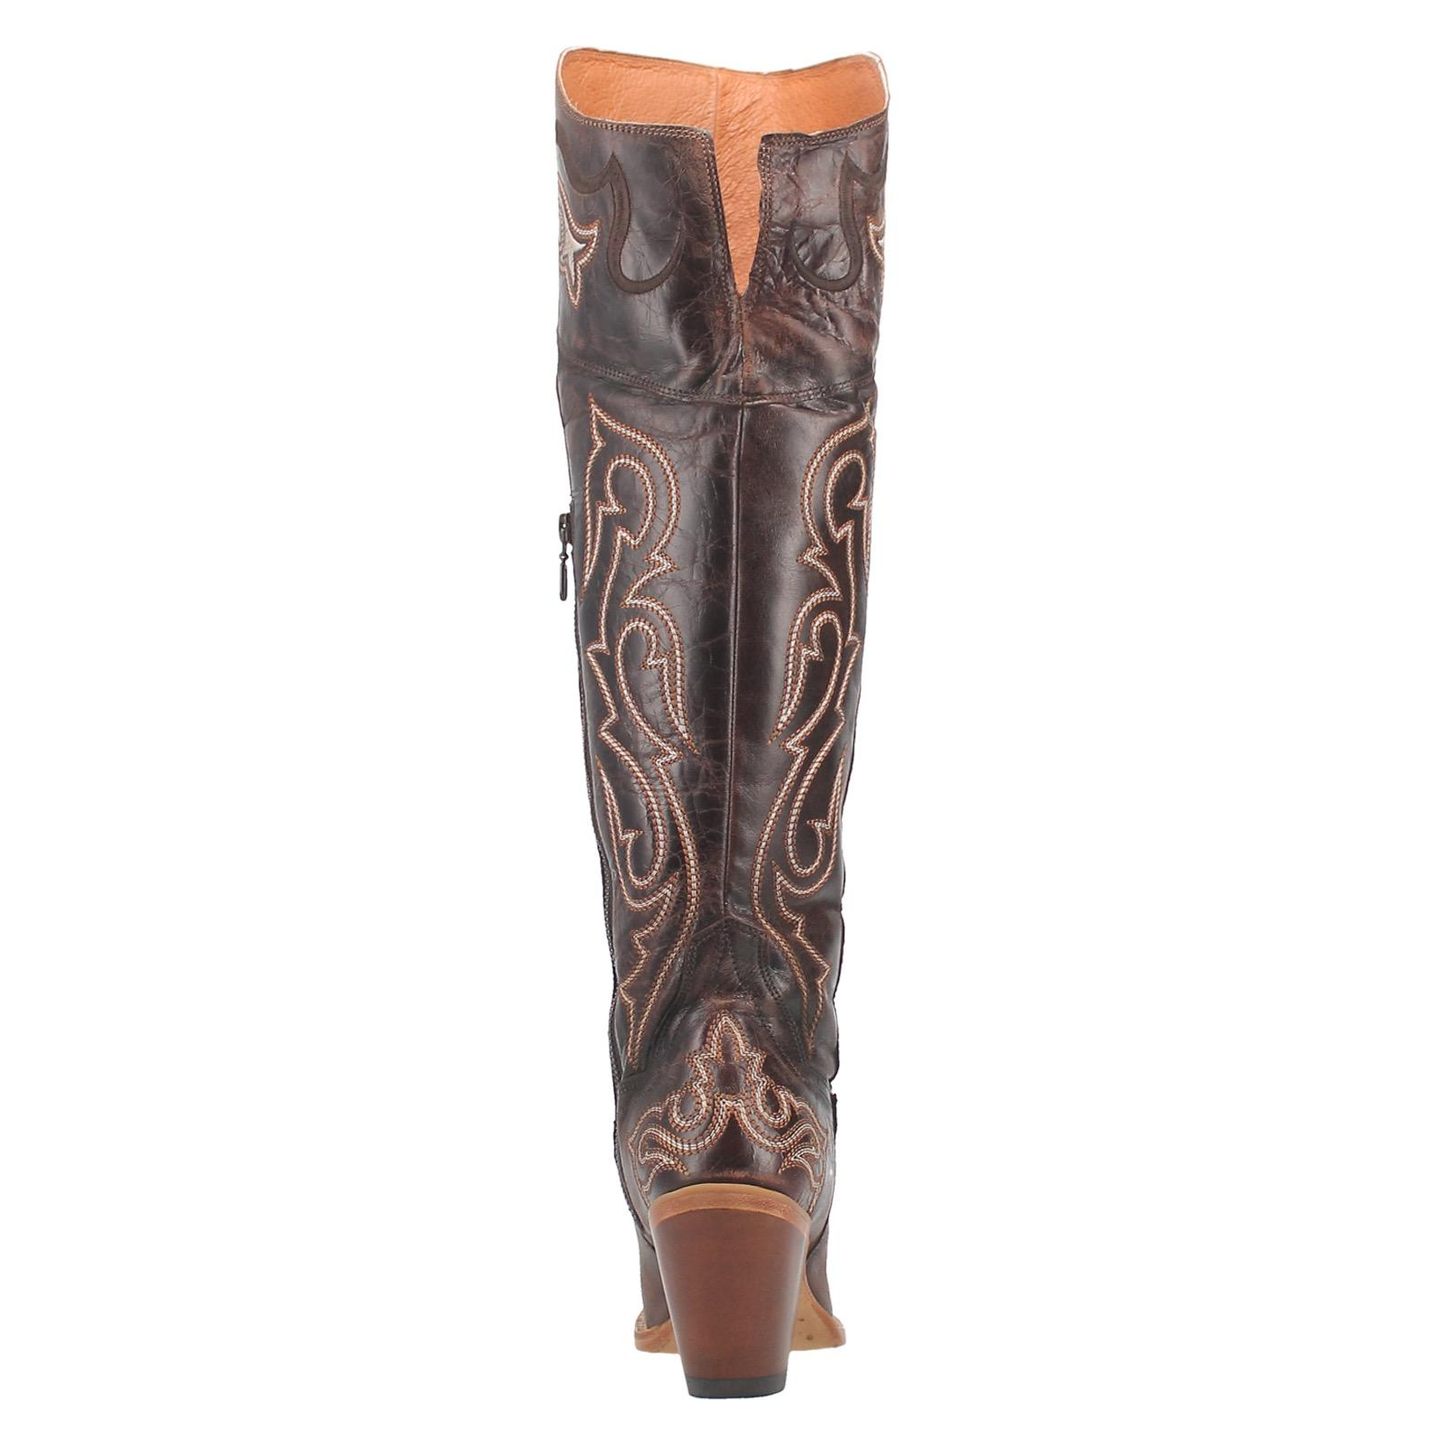 Dan Post® Ladies Kommotion Chocolate Snip Toe Tall Leather Boot DP4342